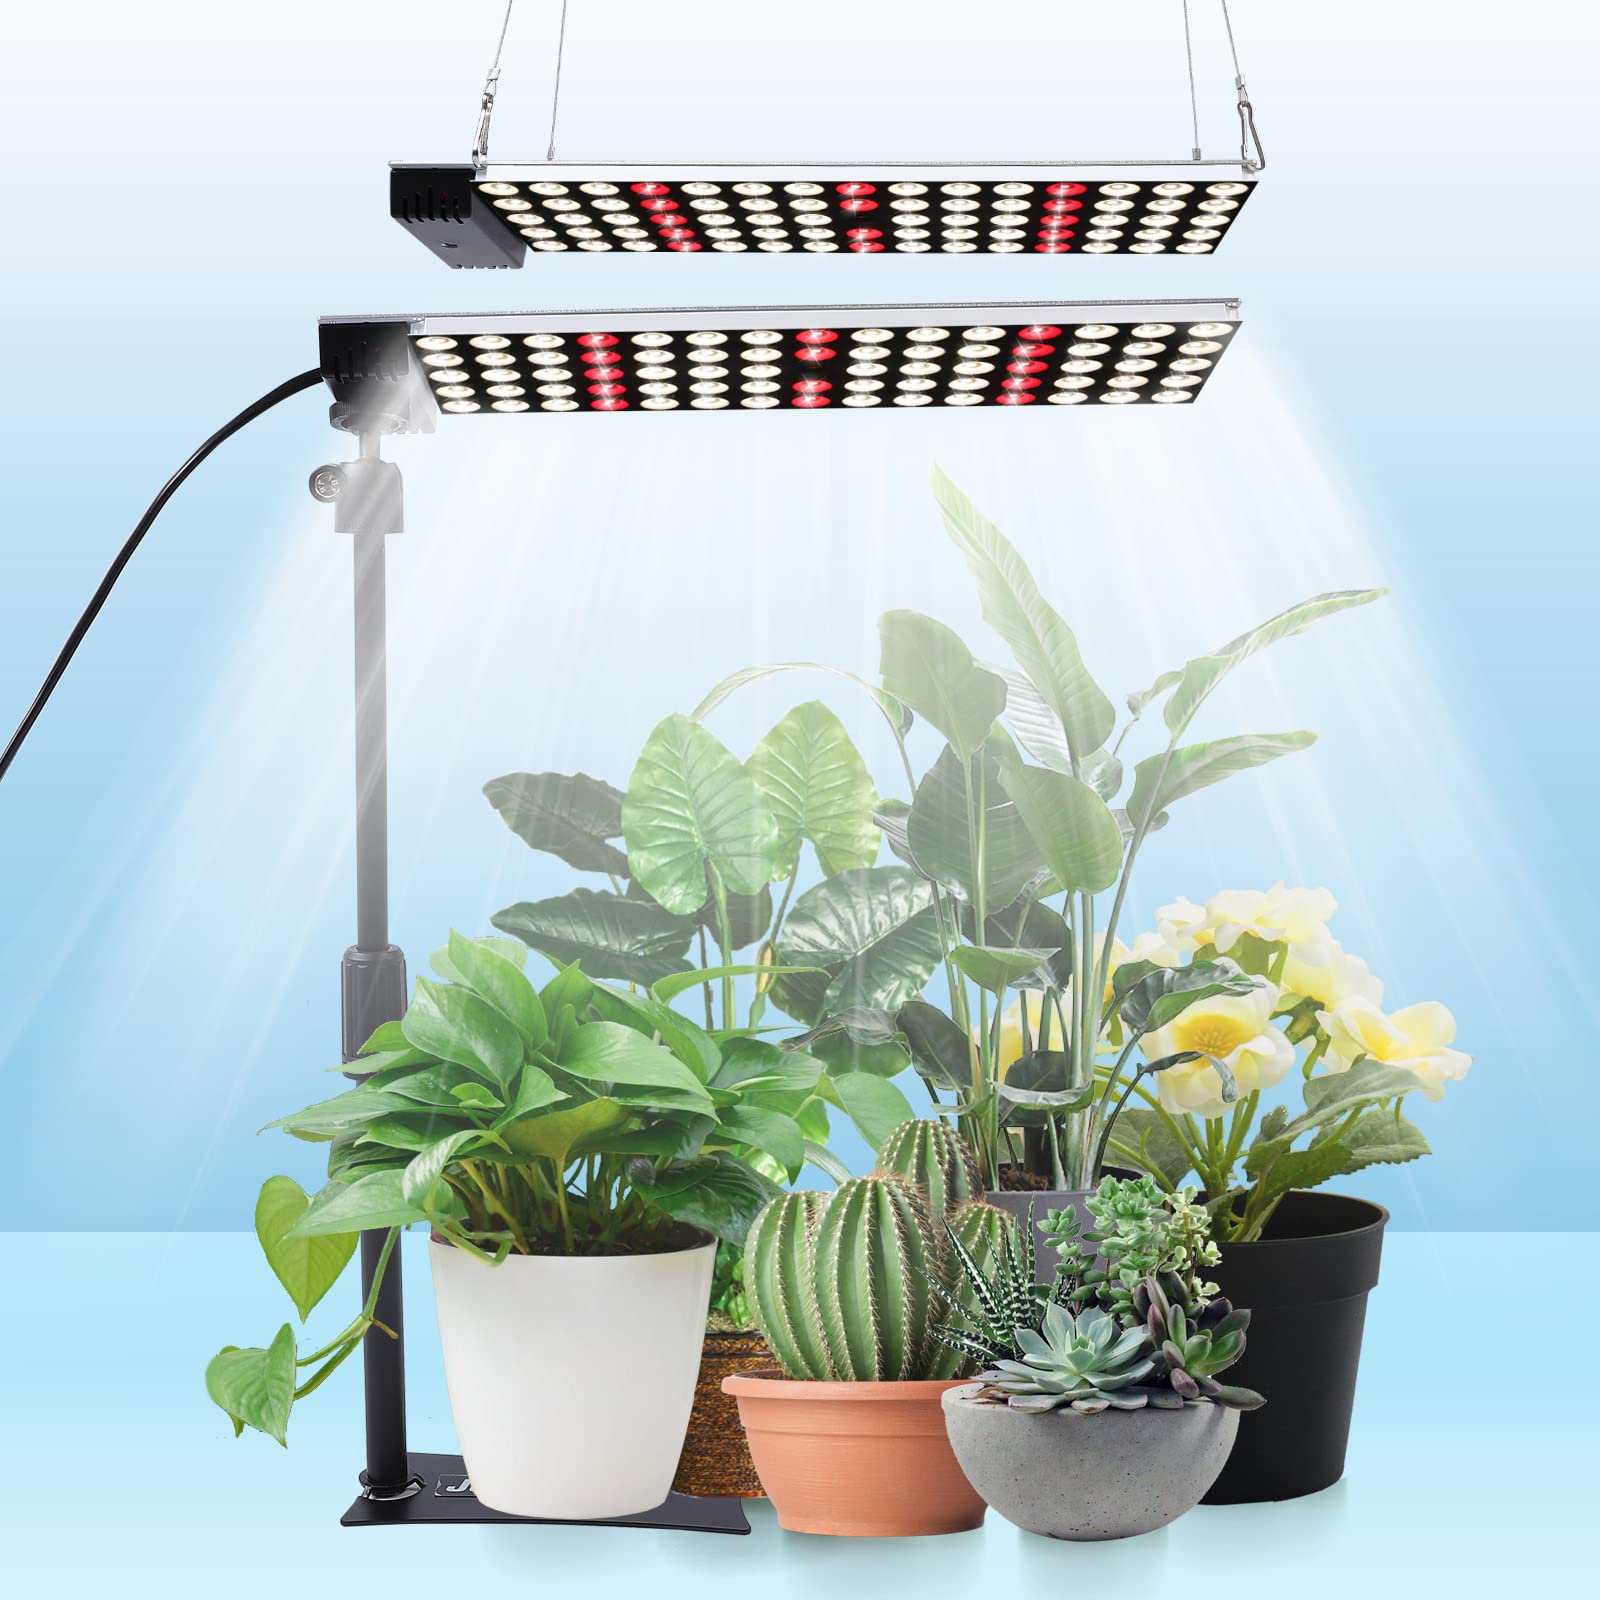 JCBritw 50W 植物育成ライト スタンド付き LED 白いフルスペクトルLED植物ライト 室内栽培 苗木栽培 顕花植物栽培向け水耕栽培ランプ 植物栽培工場 温室/園芸に適用